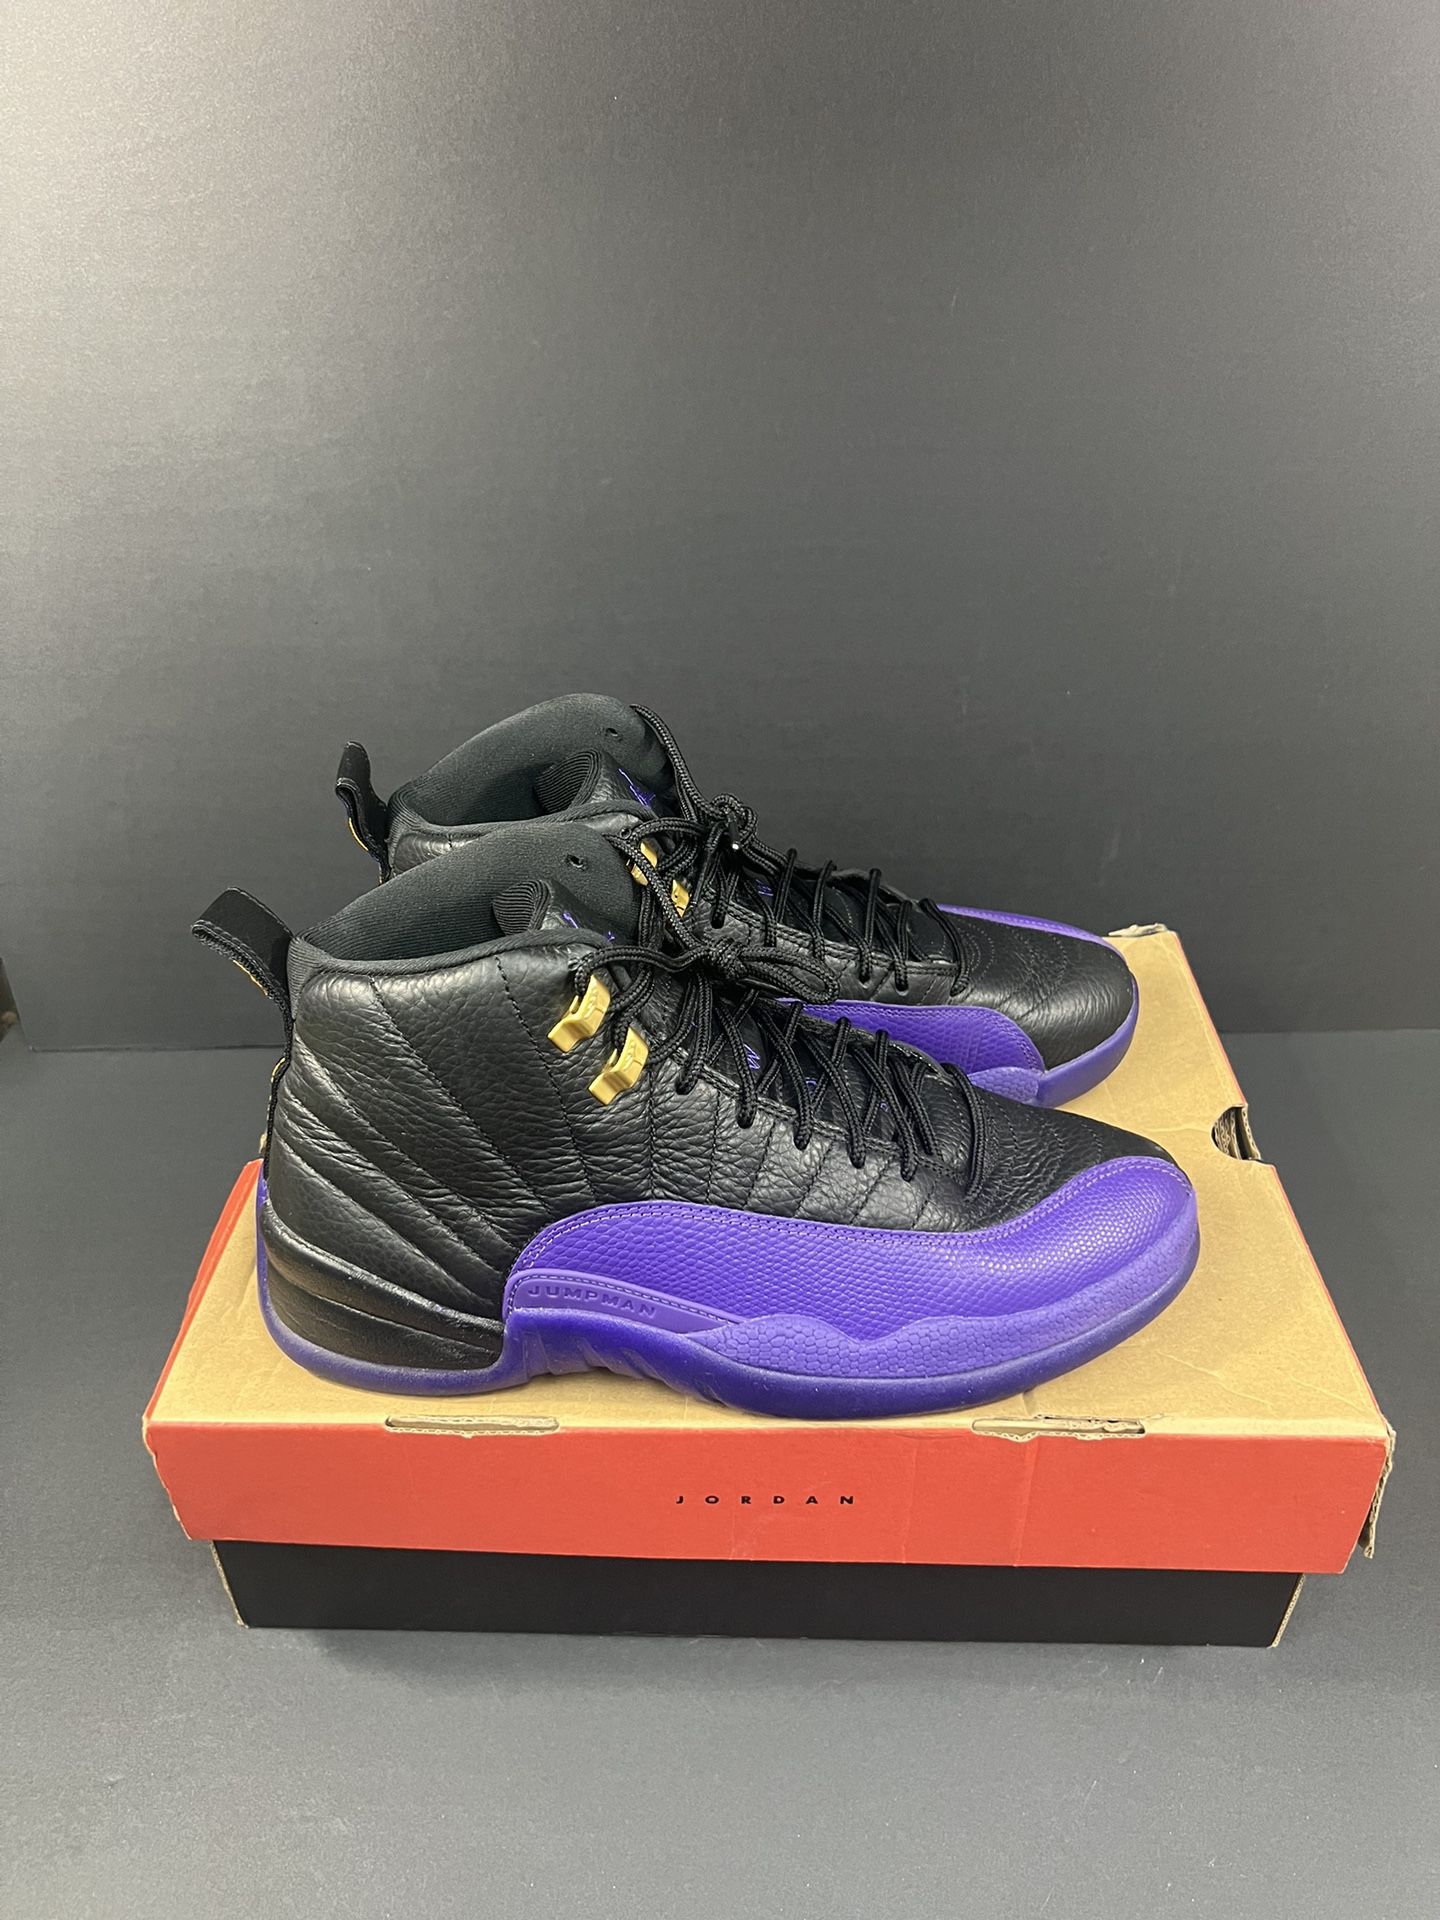 Jordan 12 Purple